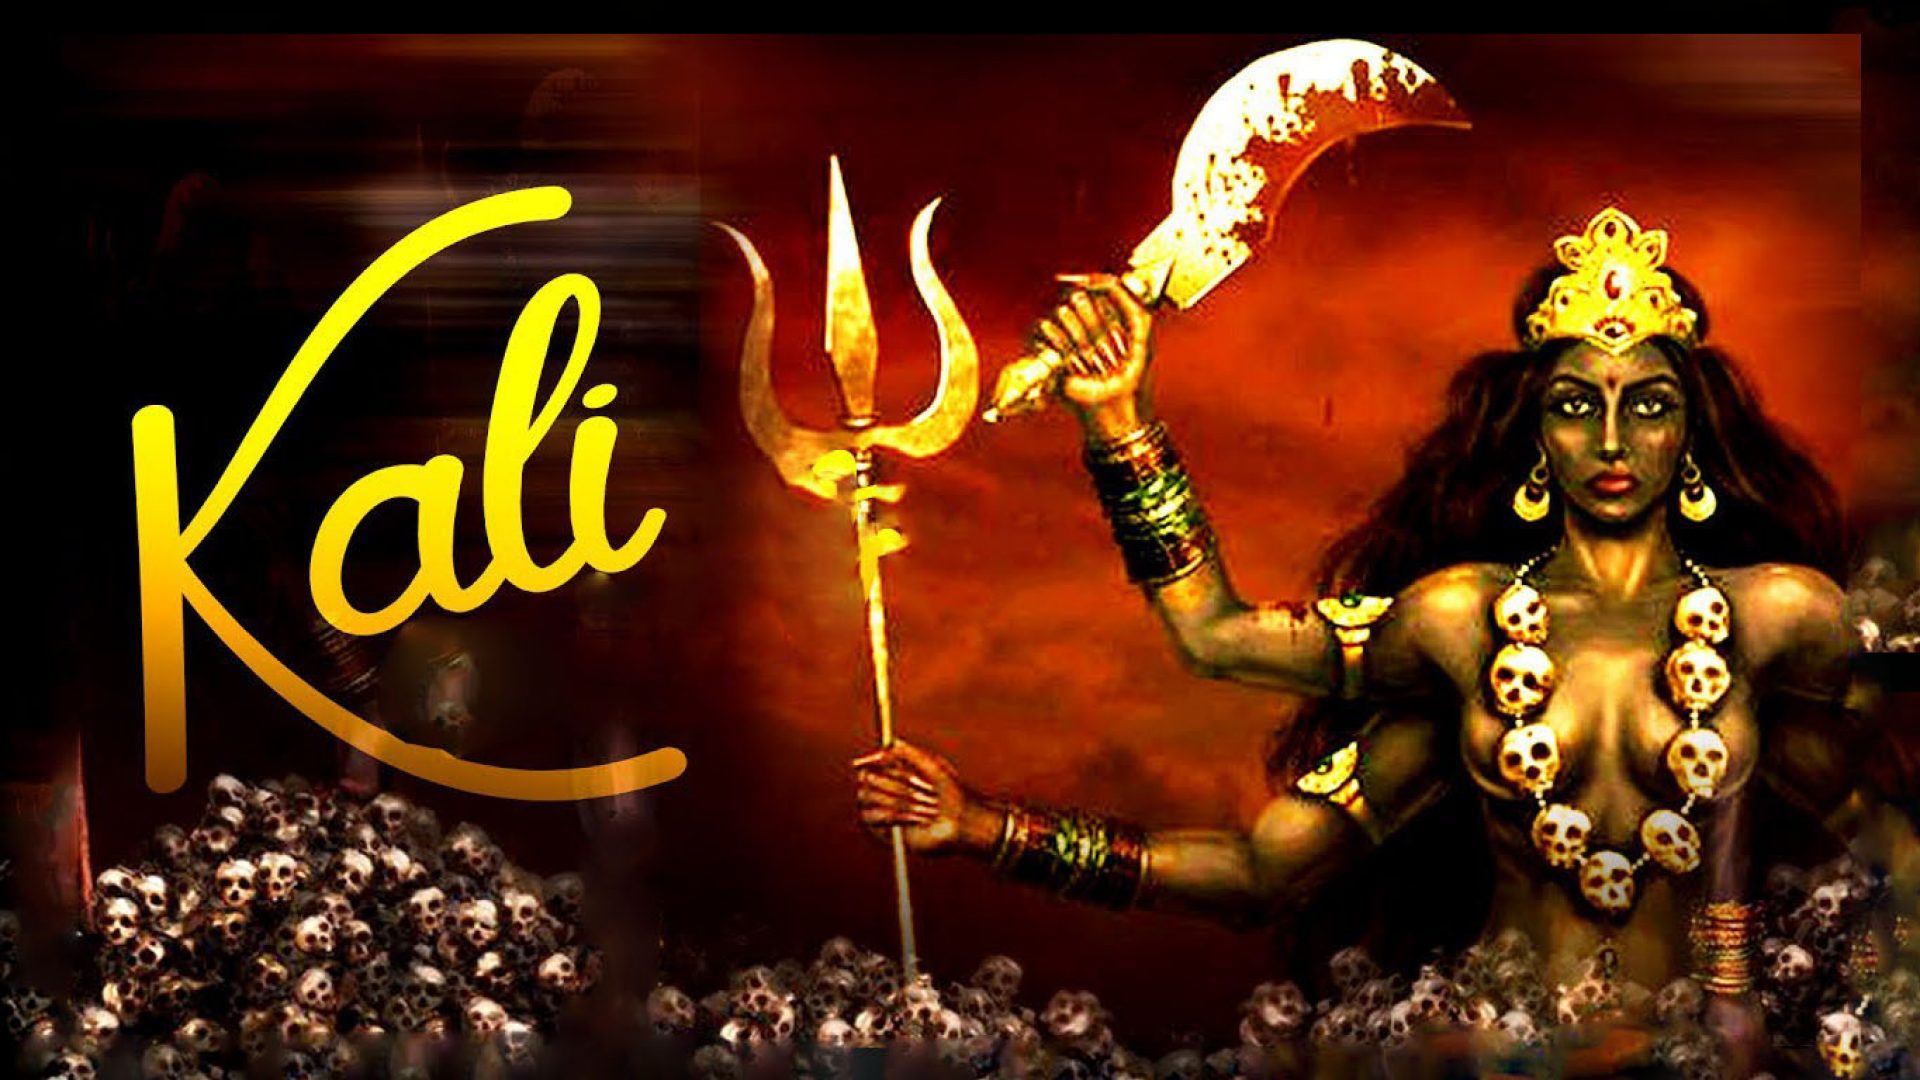 Maa Kali Wallpaper For Facebook | Hindu Gods and Goddesses